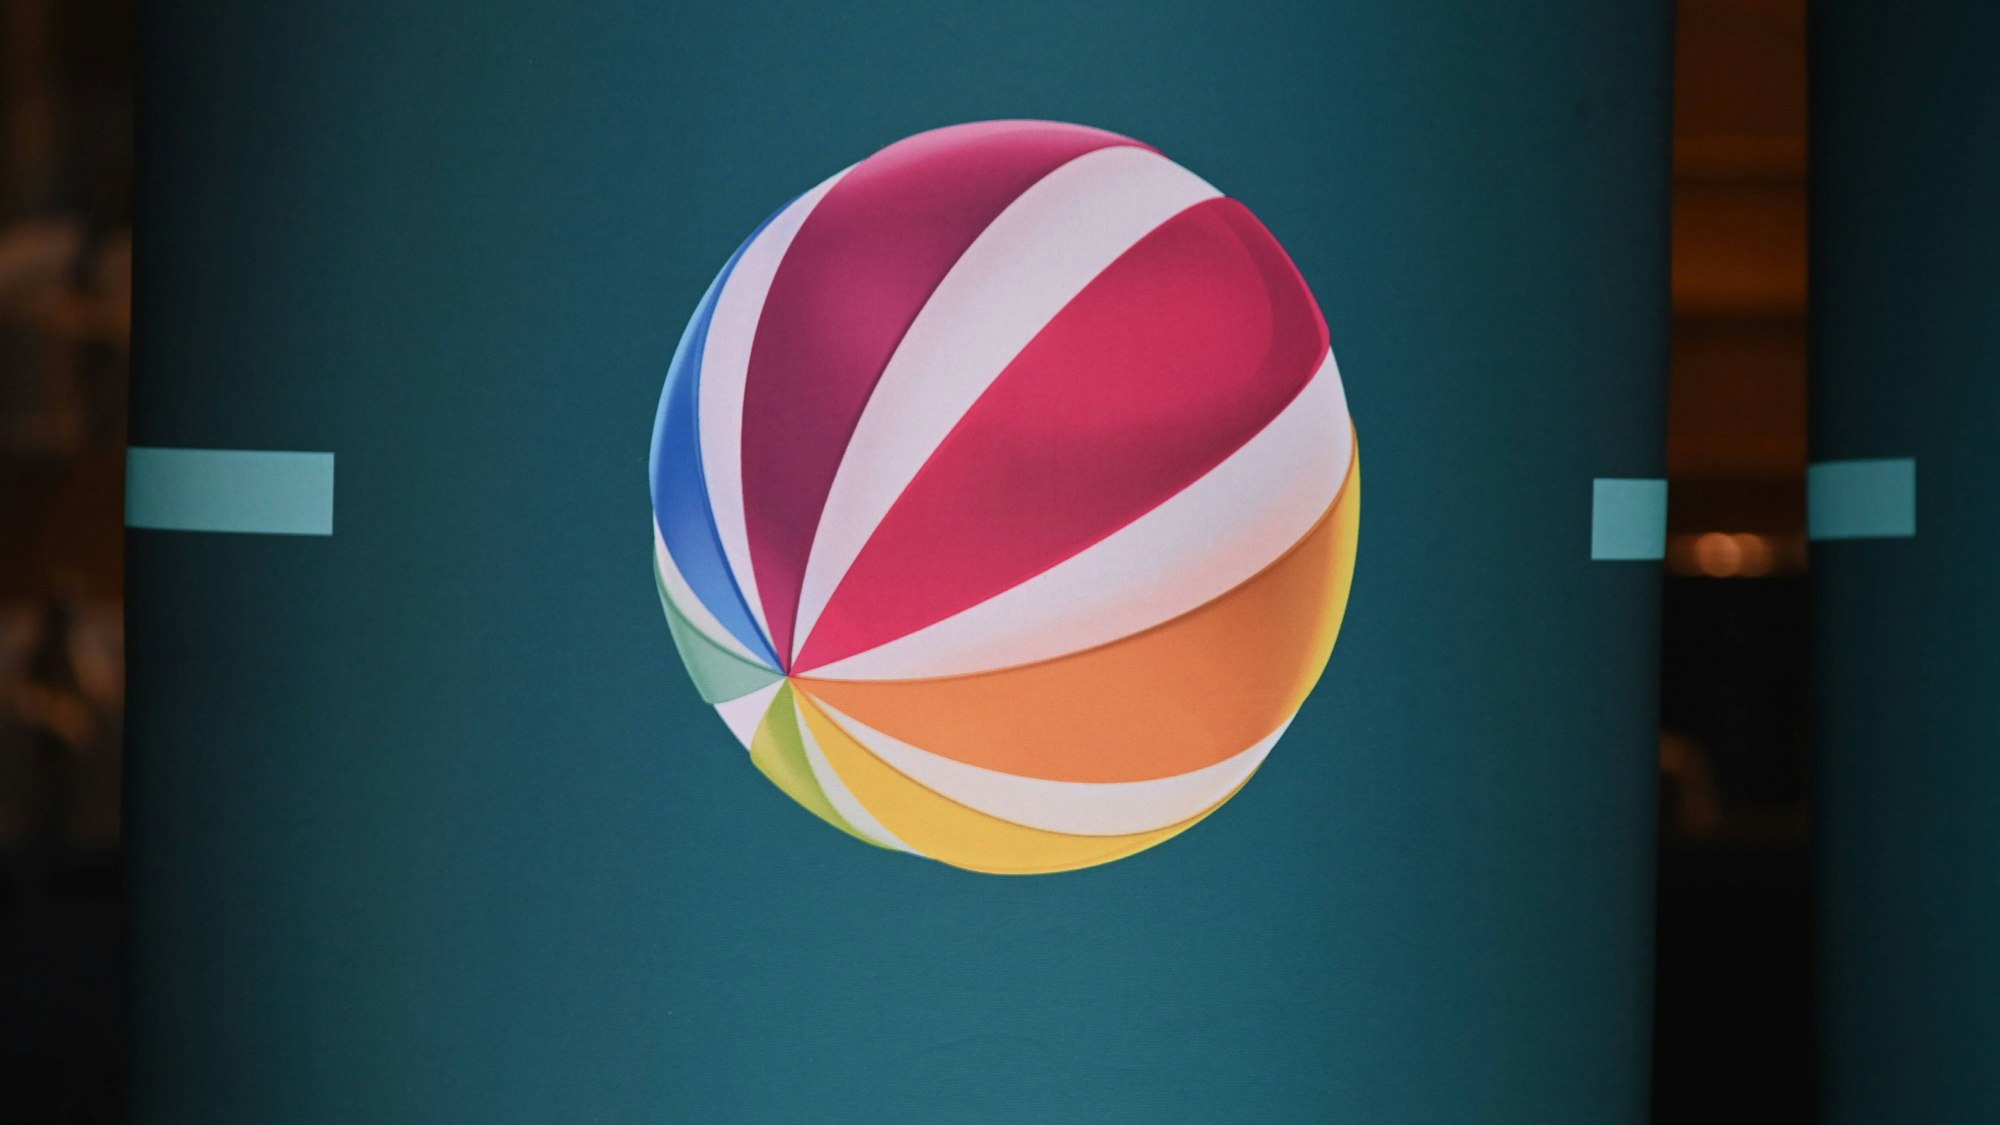 Das Logo des TV-Senders Sat.1.